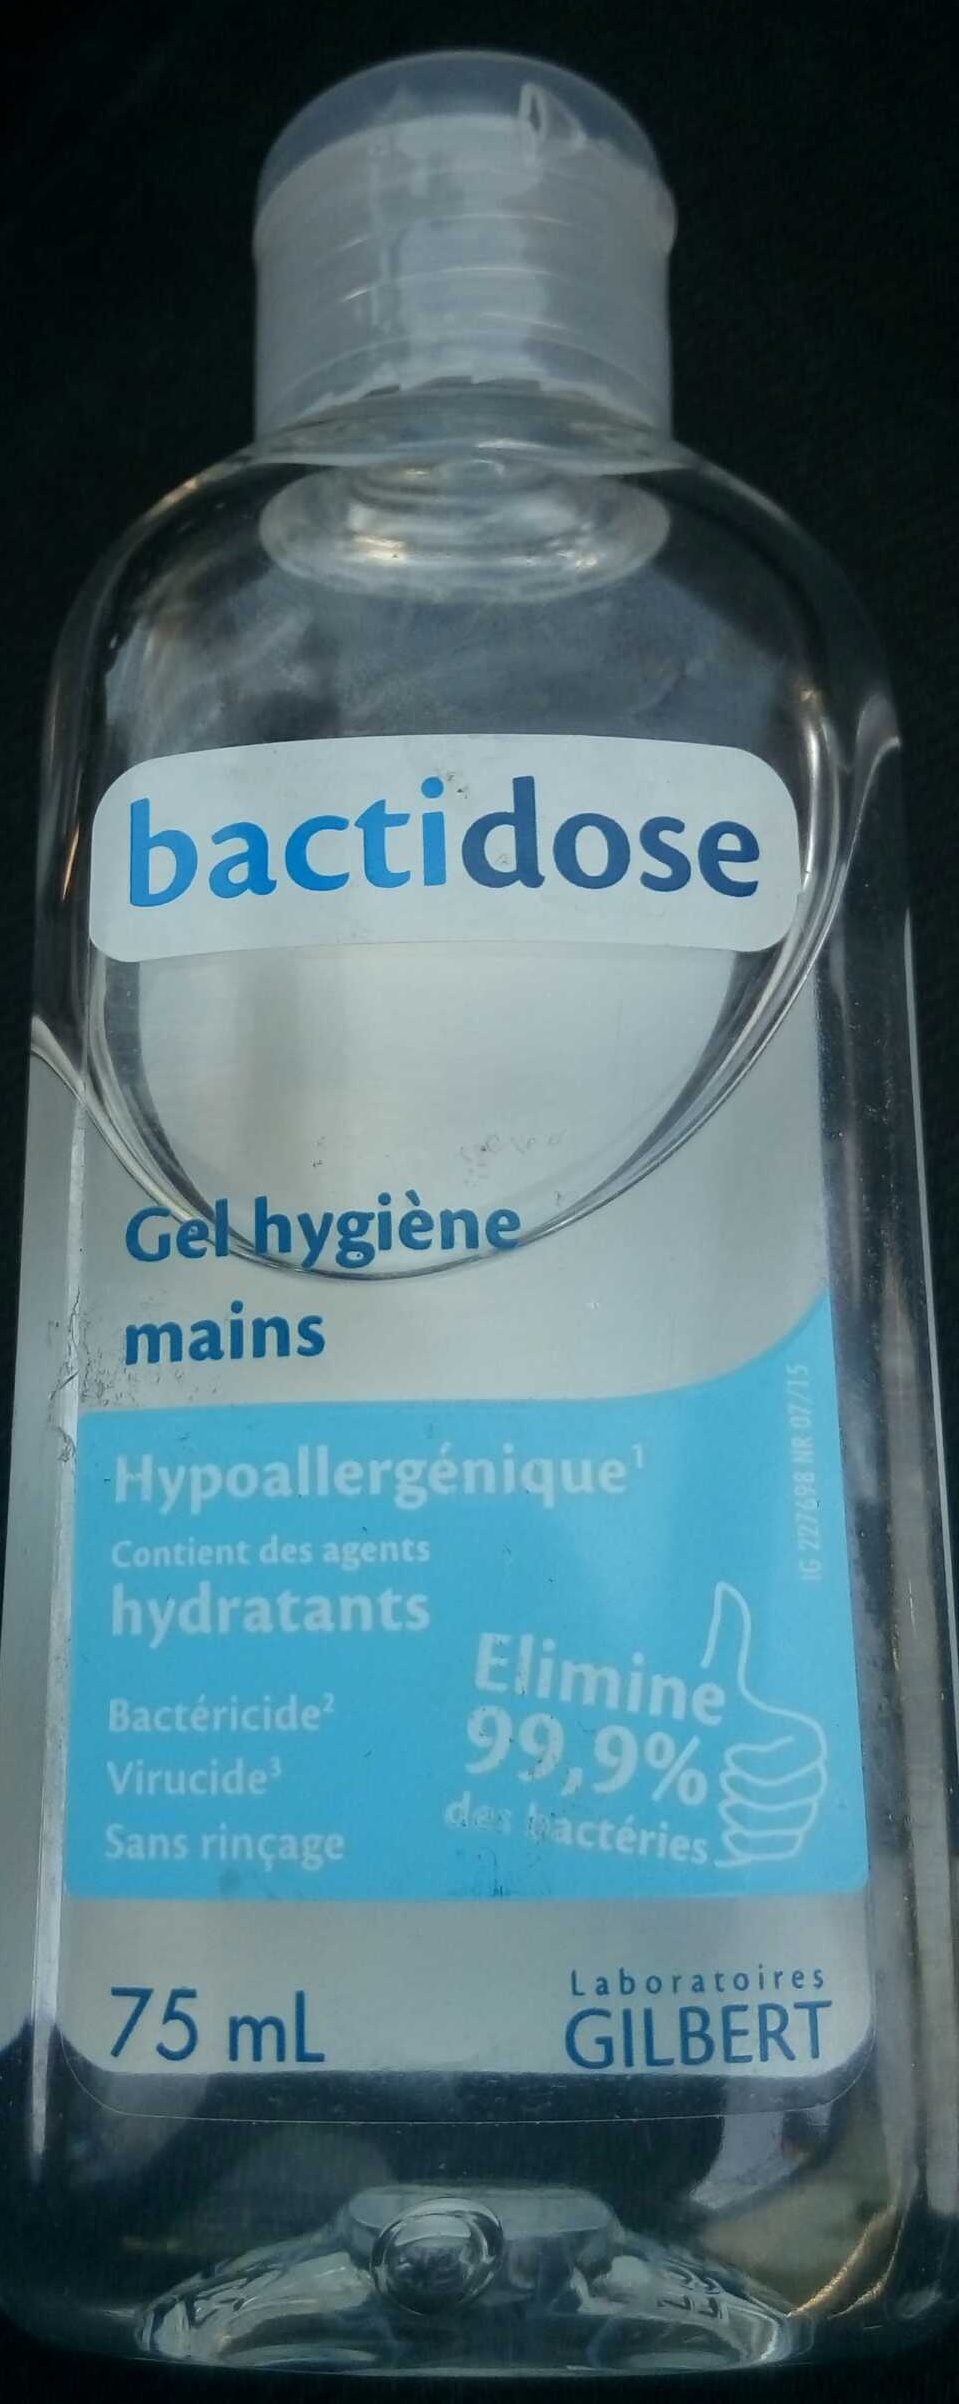 Bactidose Gel hygiène mains - Product - fr